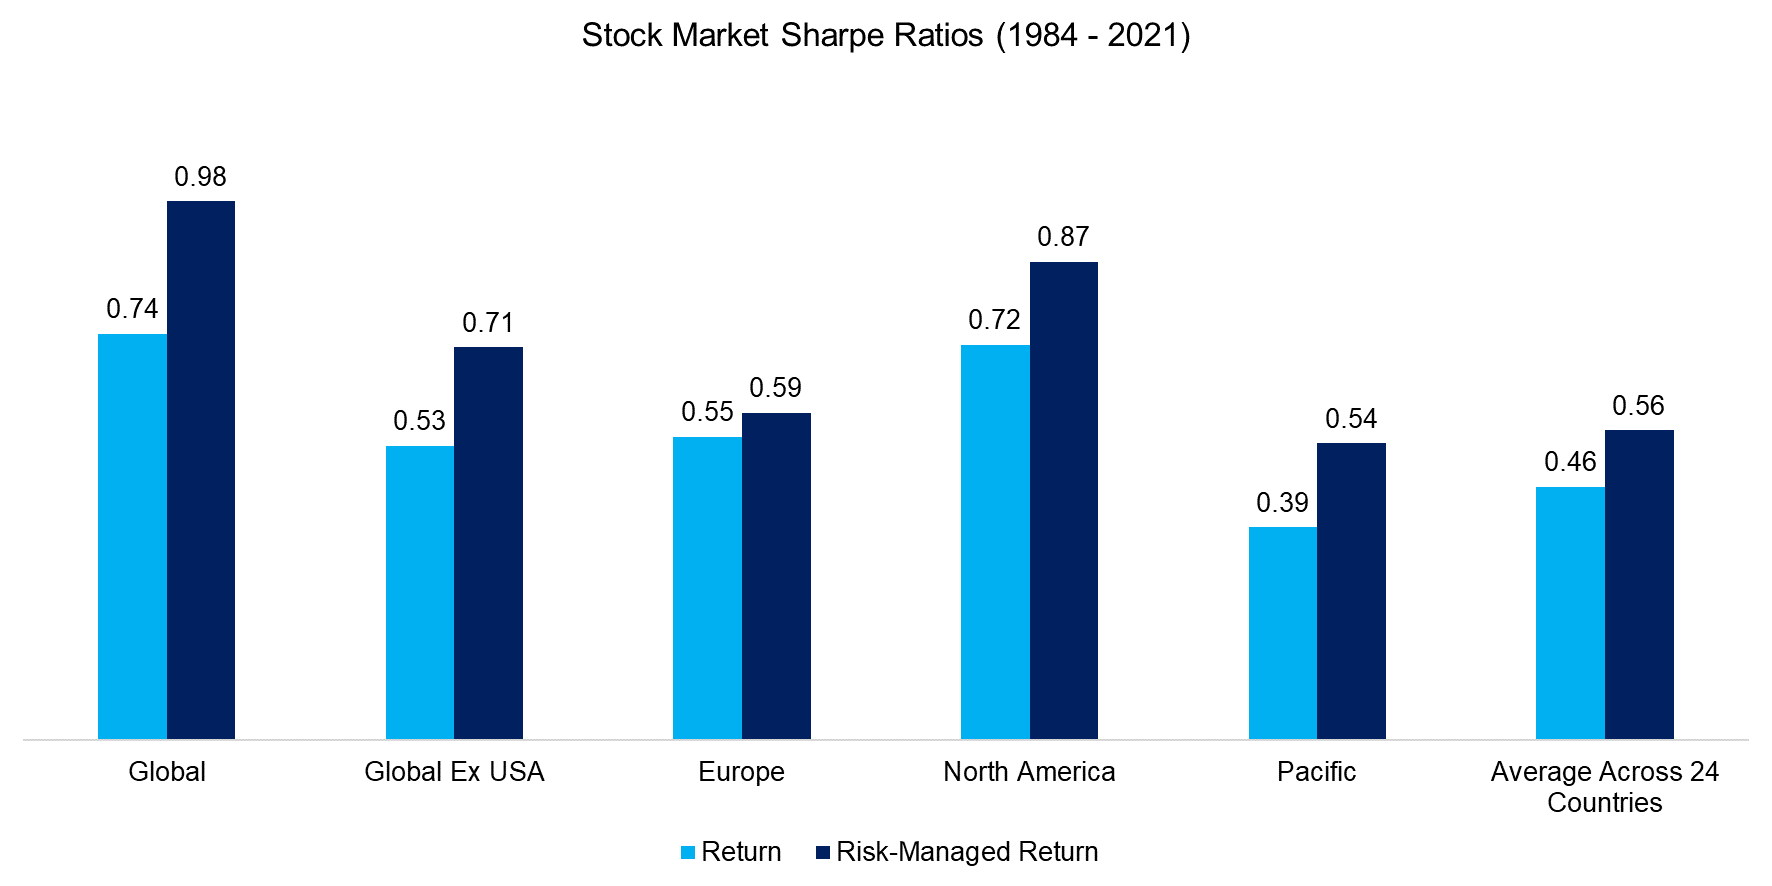 Stock Market Sharpe Ratios (1984 - 2021)